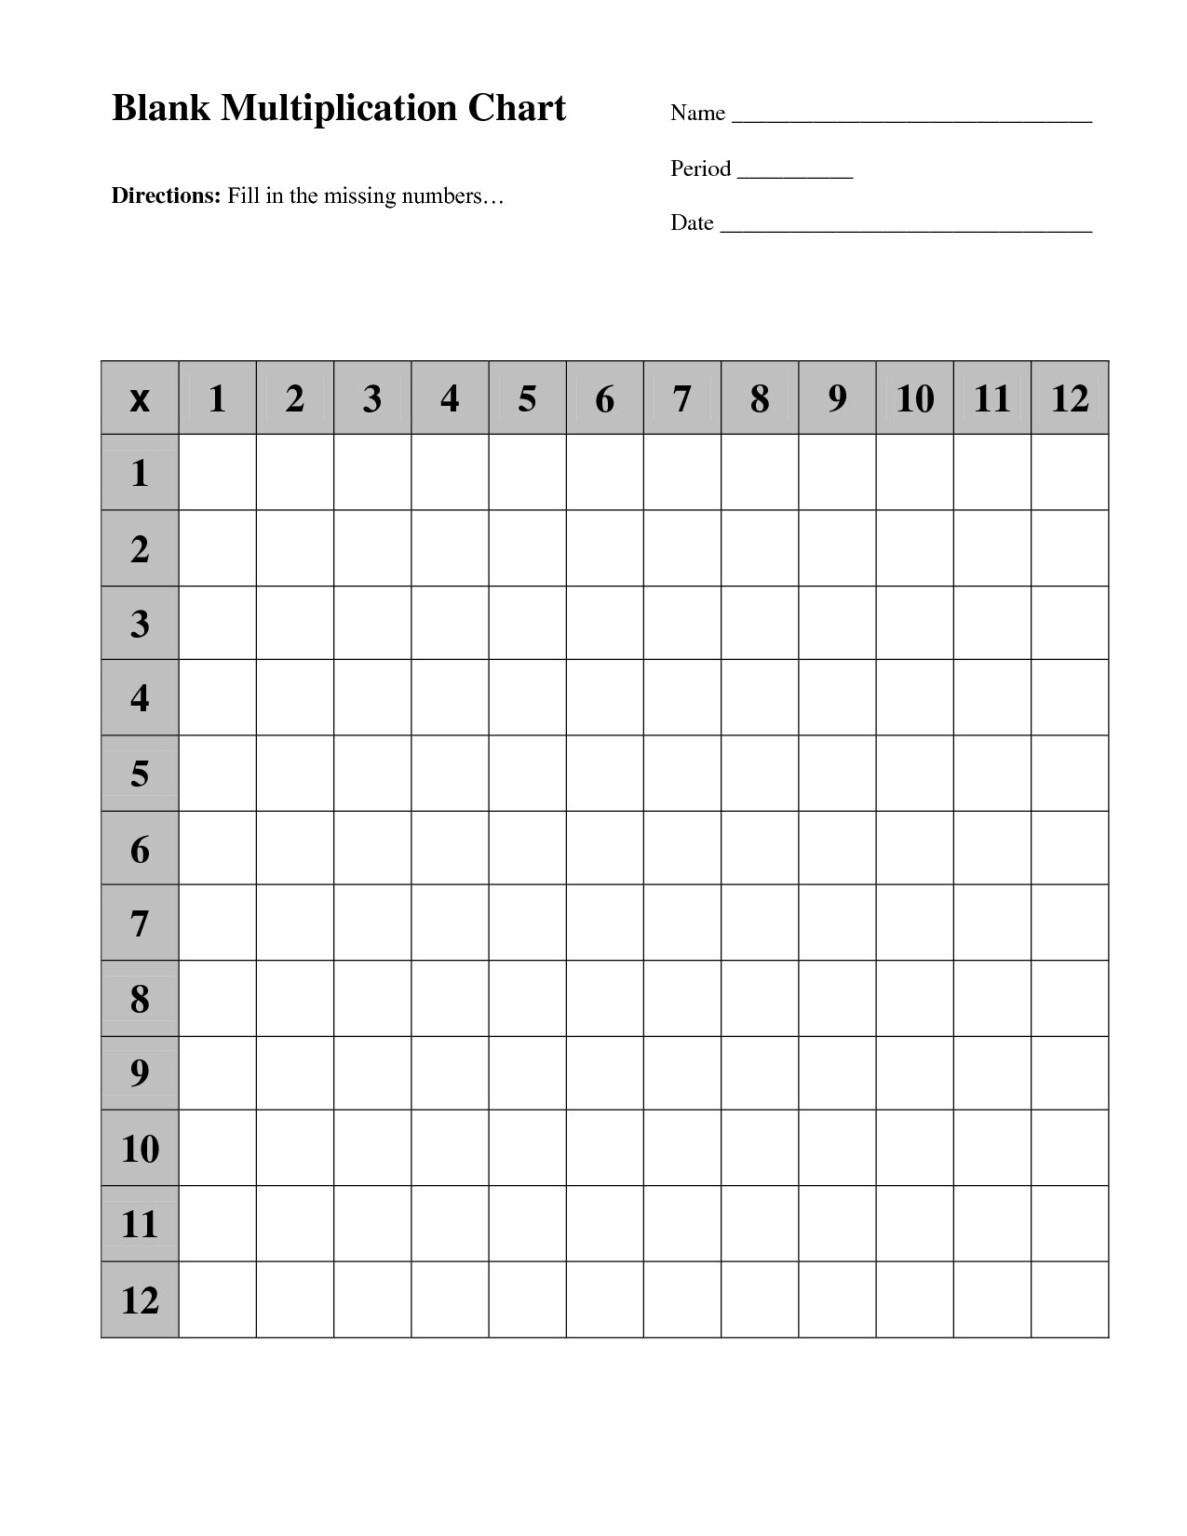 Blank Multiplication Chart Free Printable Pdf